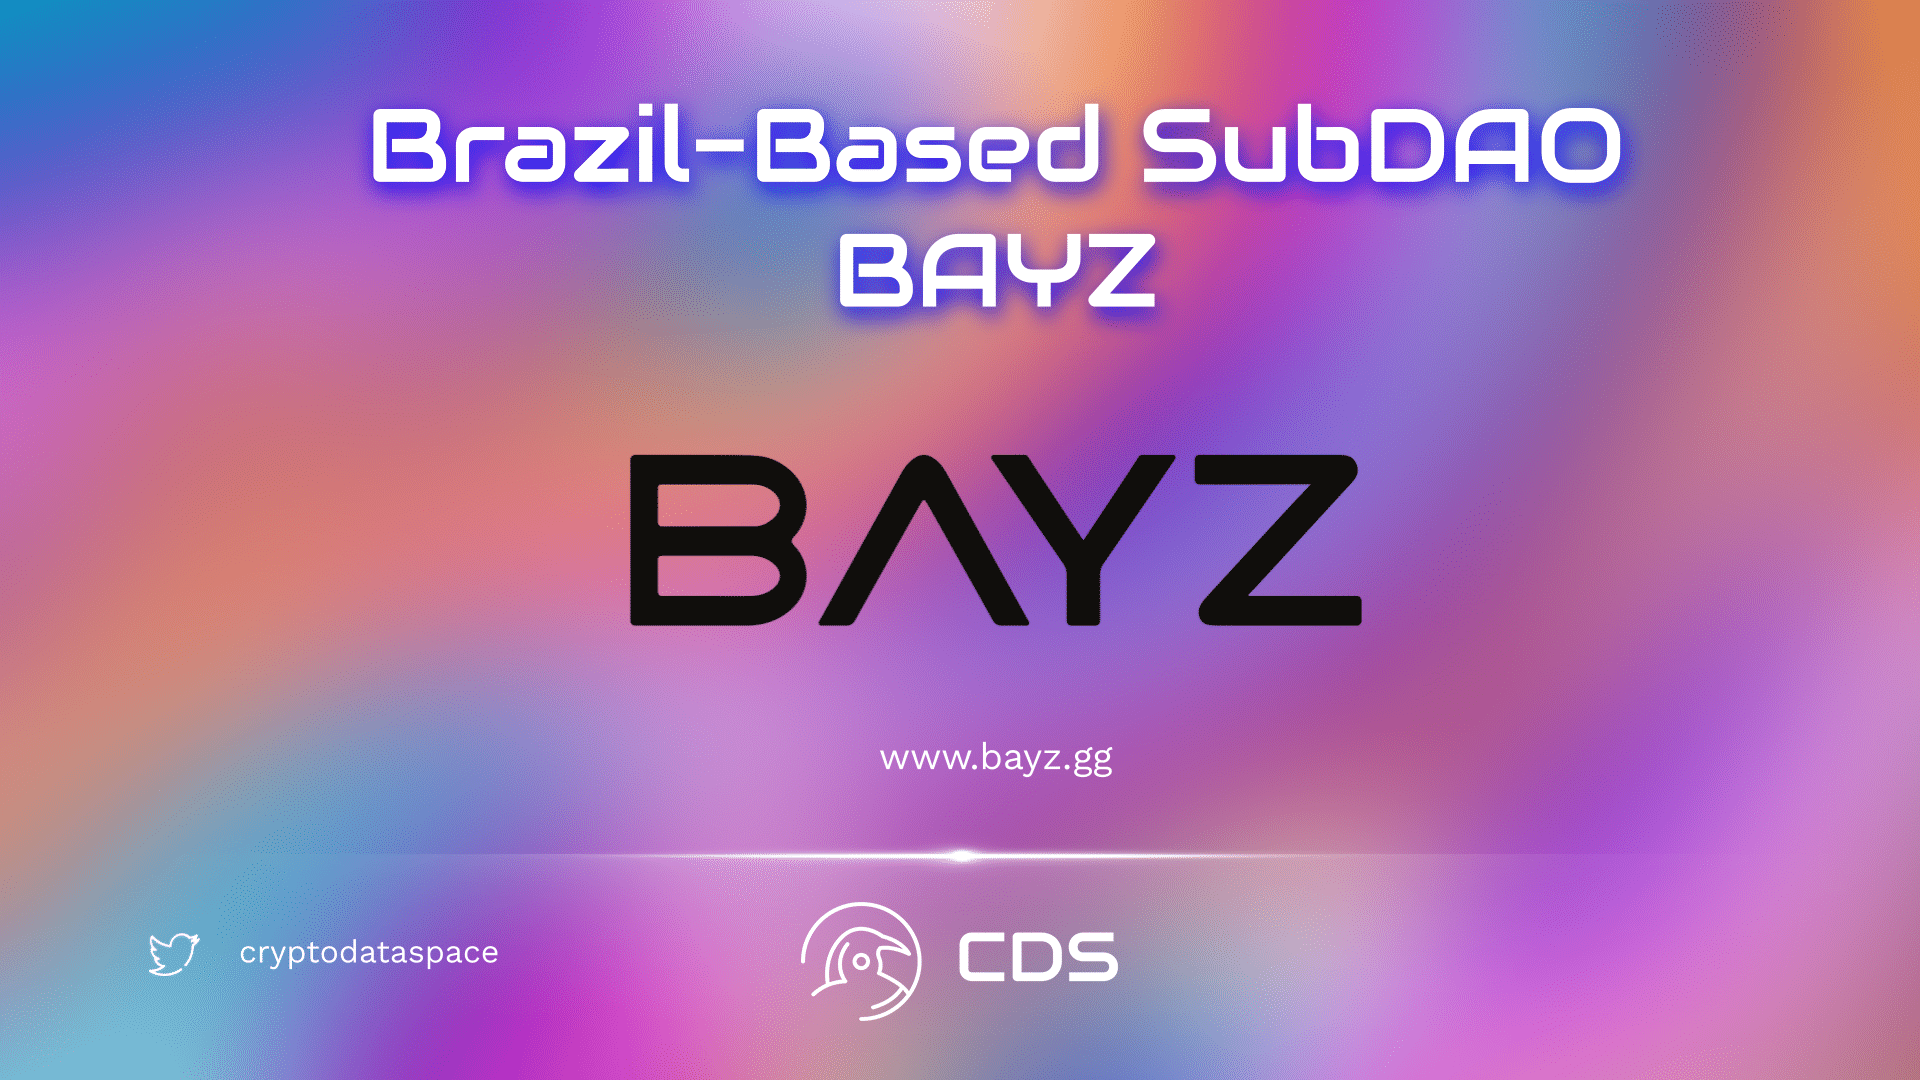 Brazil-Based SubDAO BAYZ